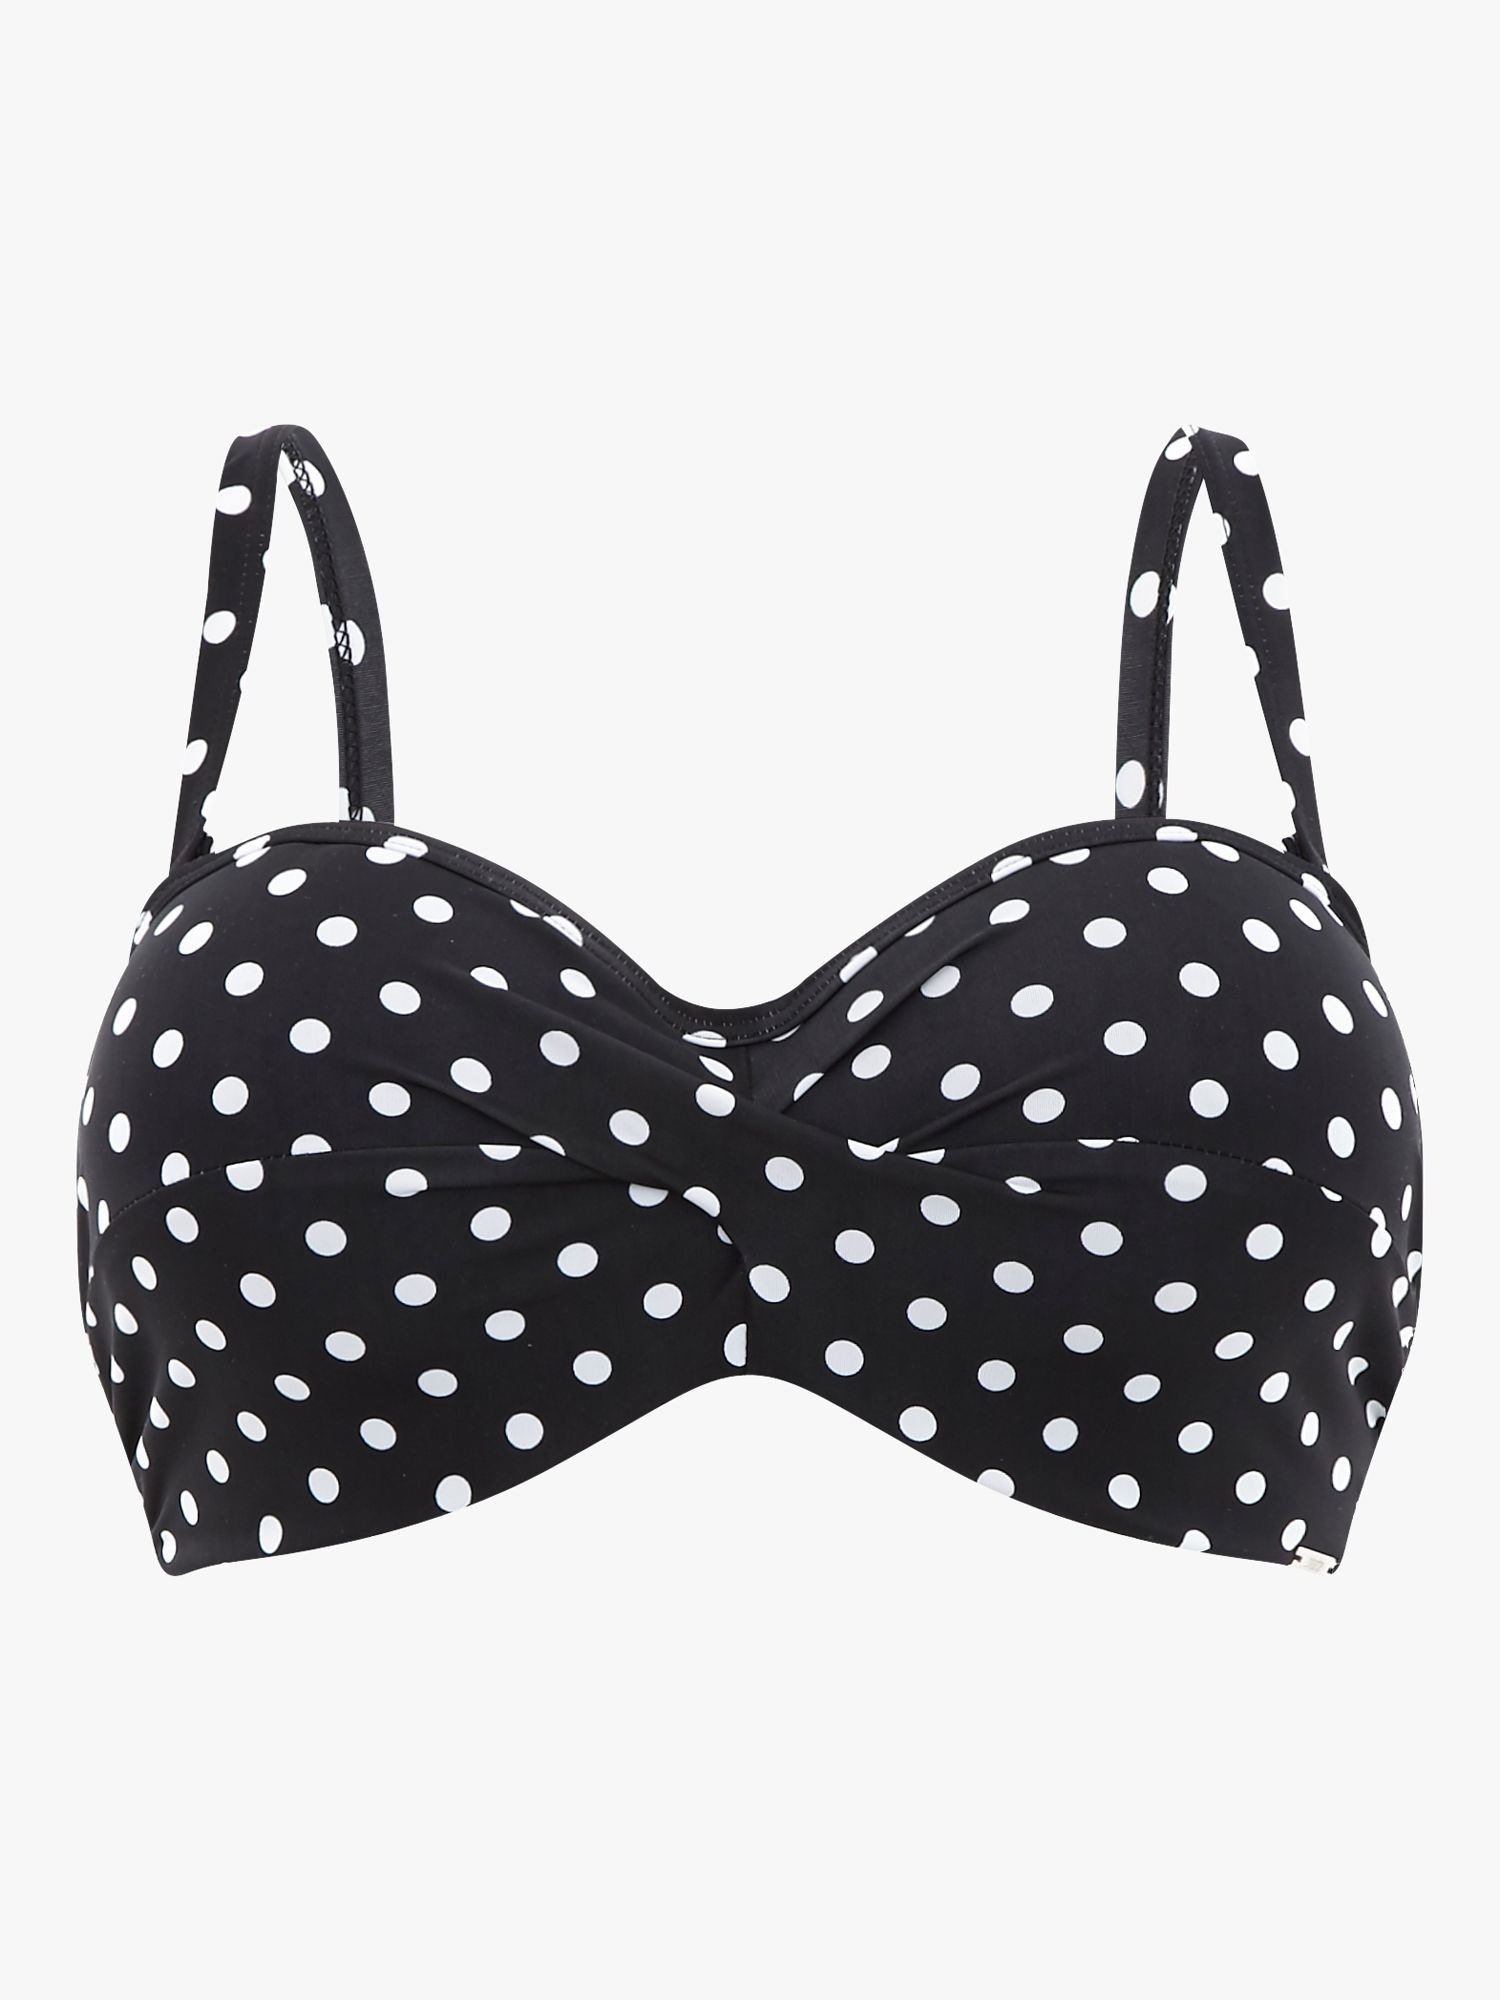 Panache Anya Spot Twist Bandeau Bikini Top, Black/White, 34FF